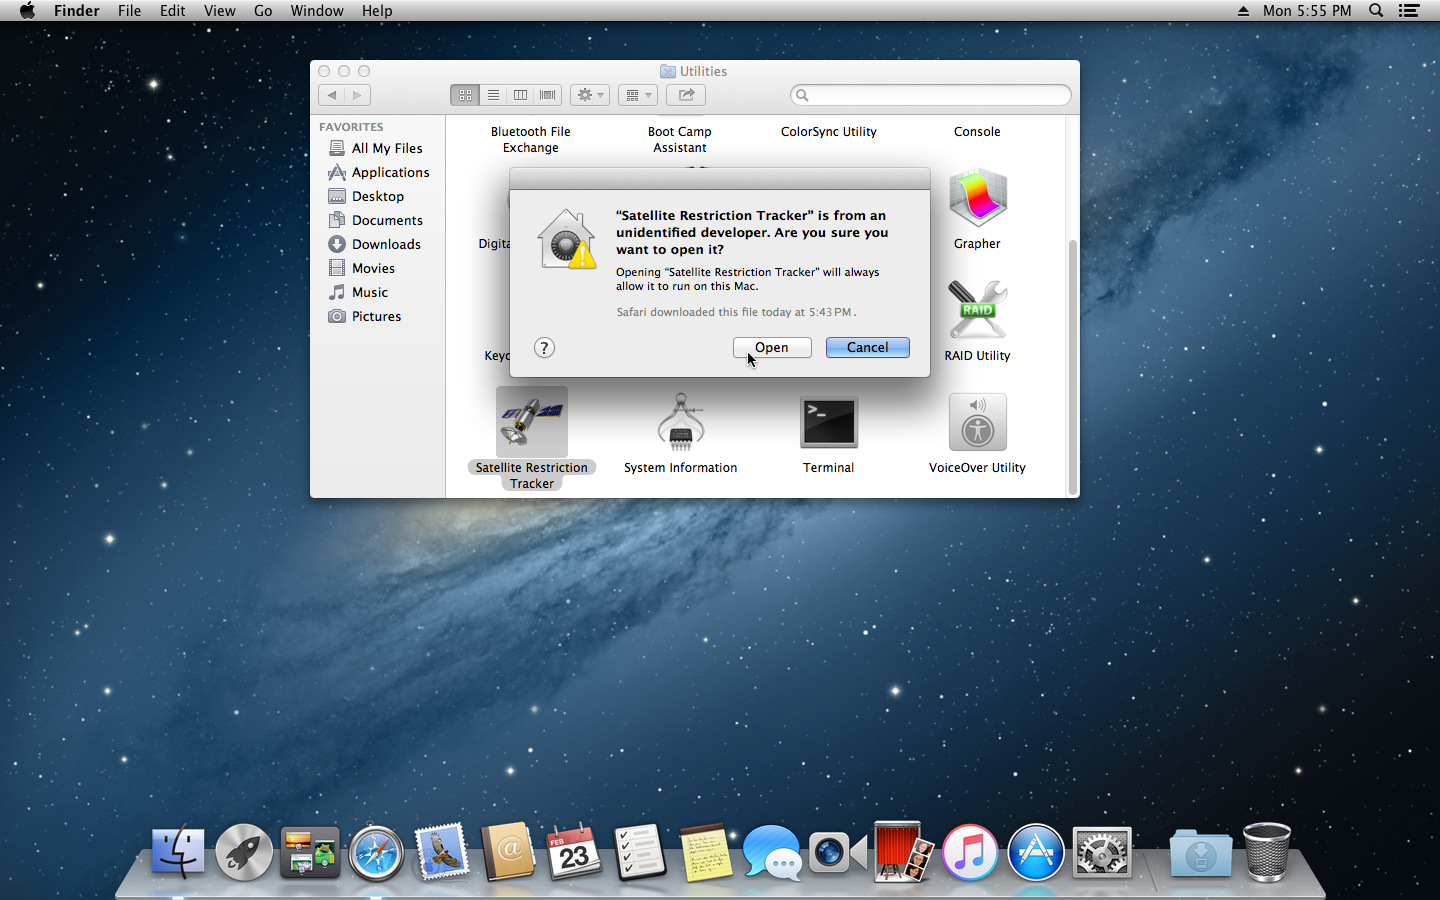 macOS 10.8
🍎